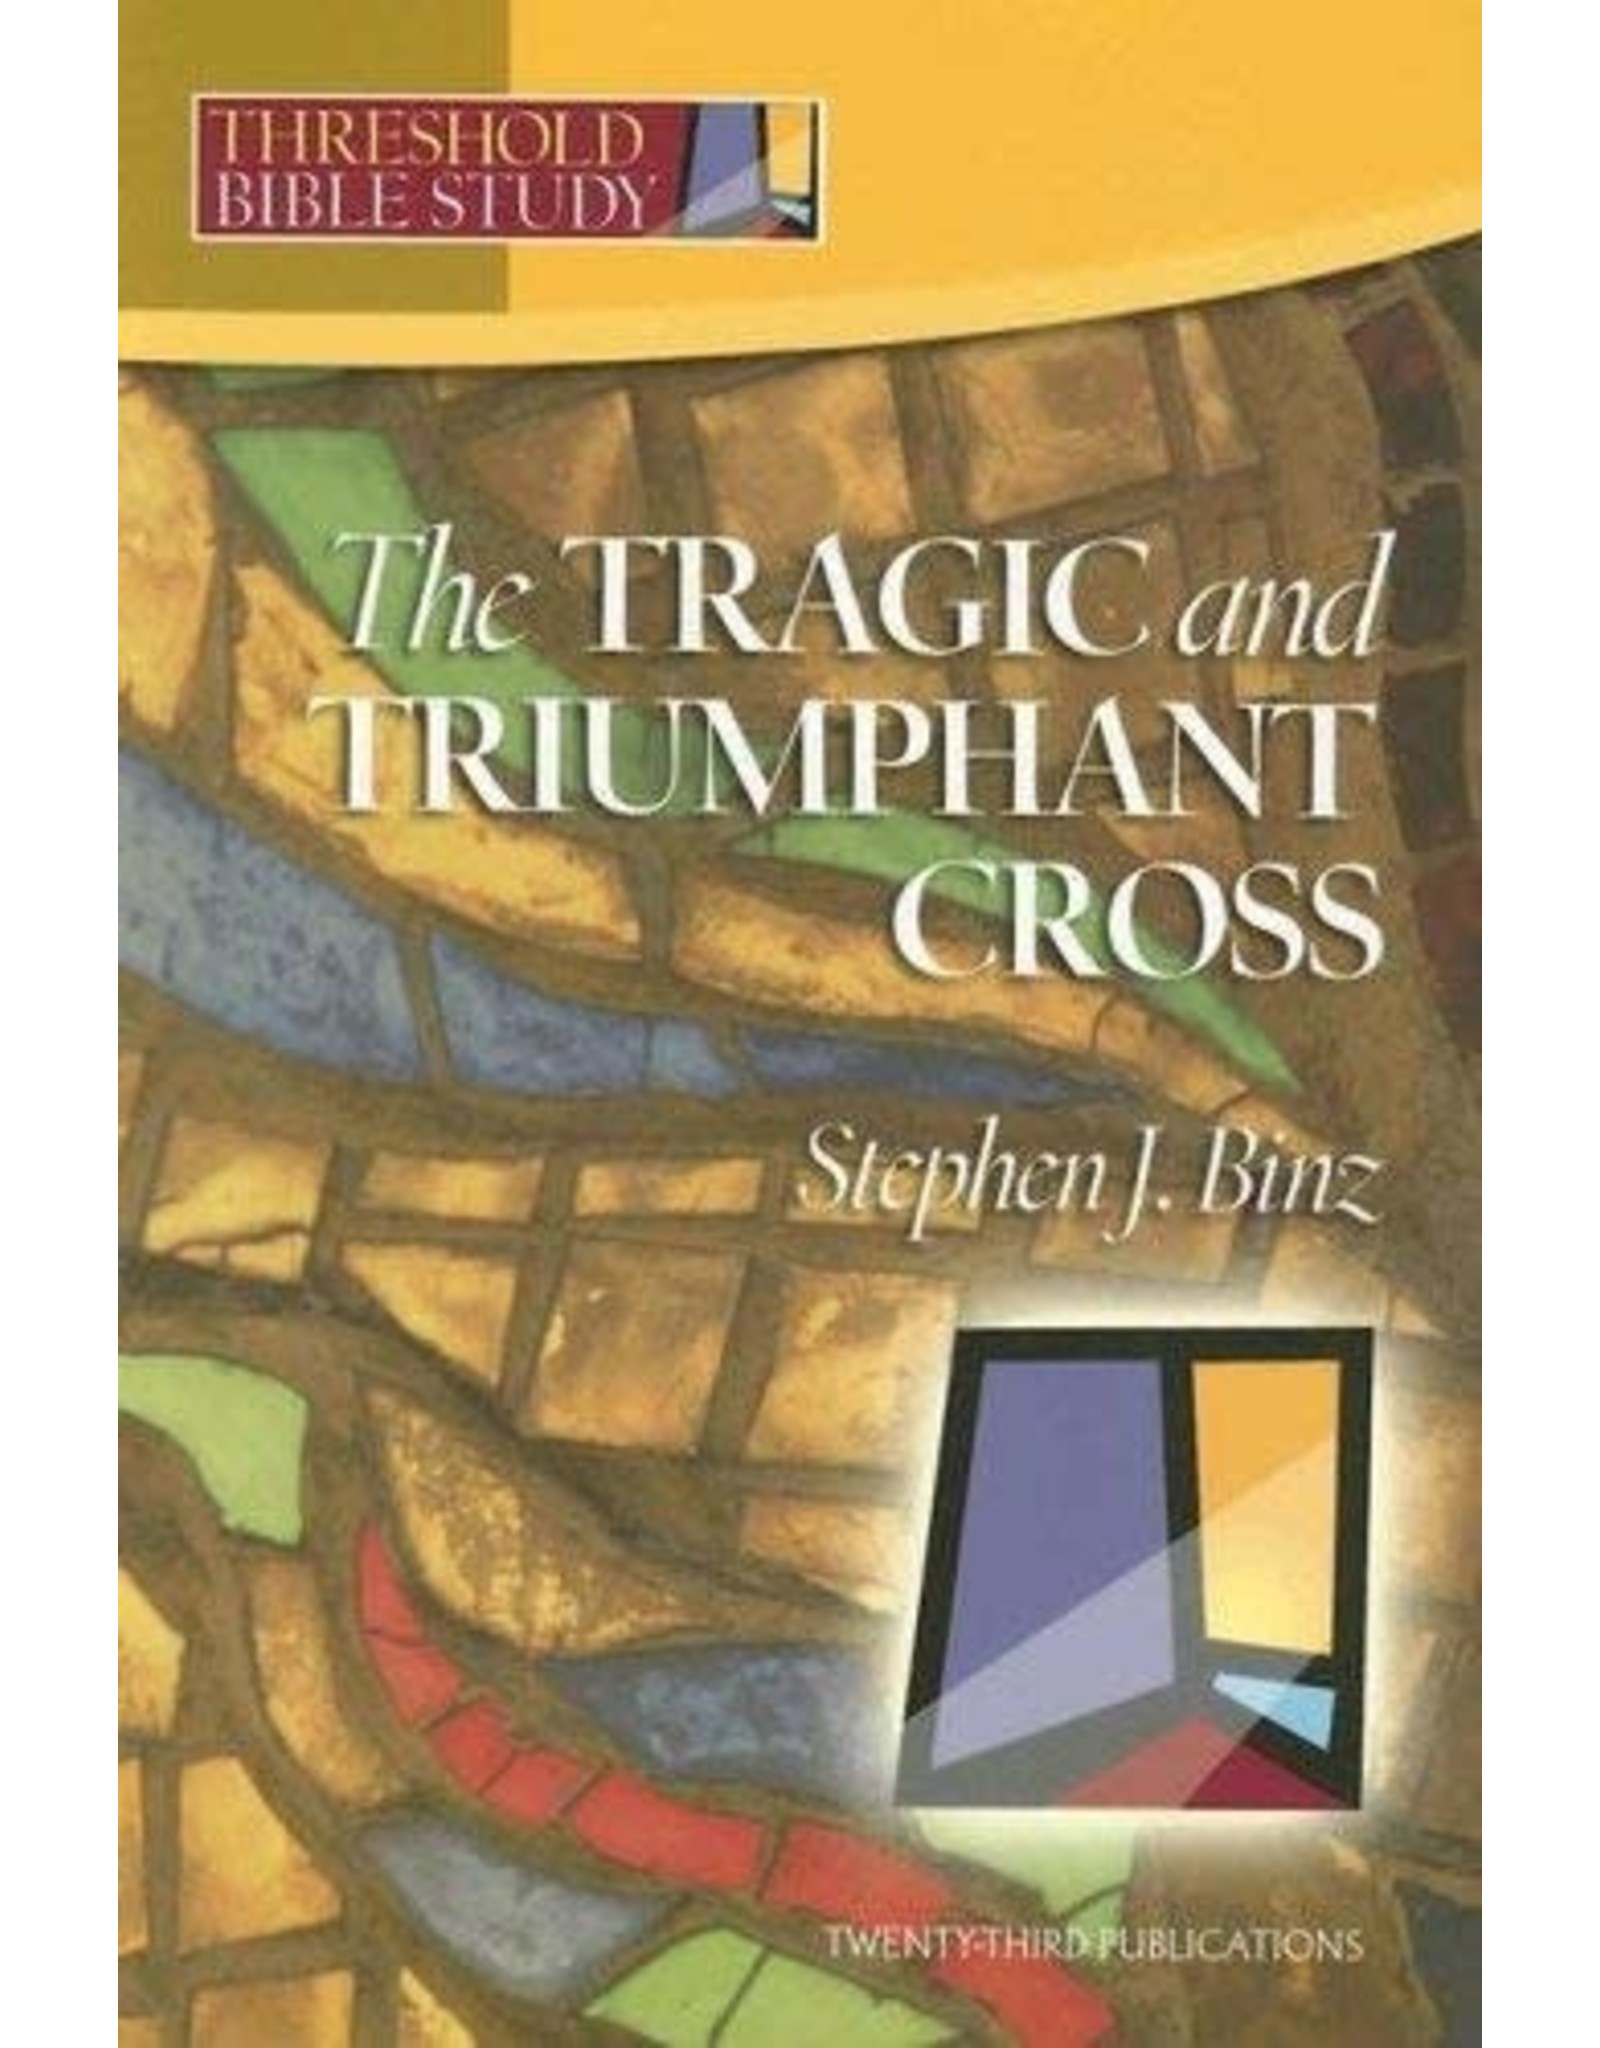 The Tragic & Triumphant Cross (Threshold Bible Study)